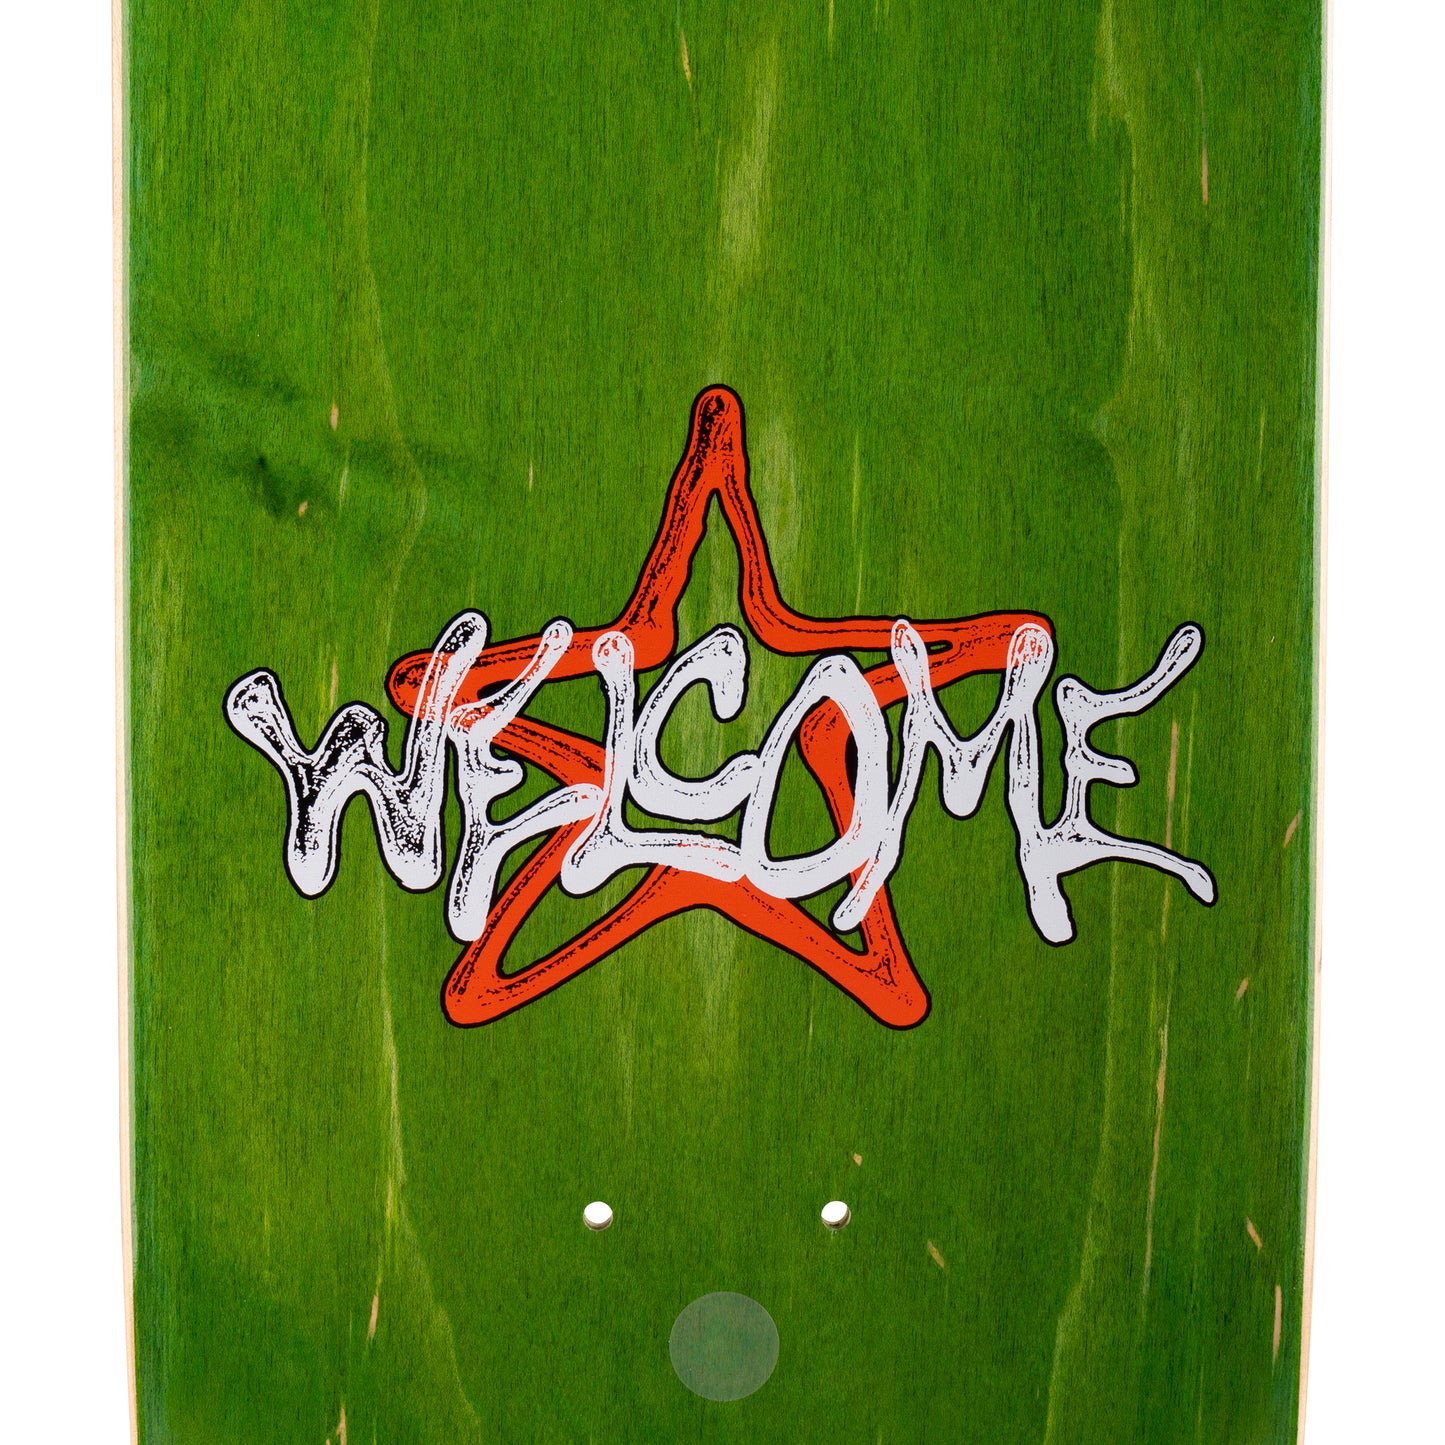 Welcome Face on Son of Moontrimmer Bone Skateboard Deck 8.25